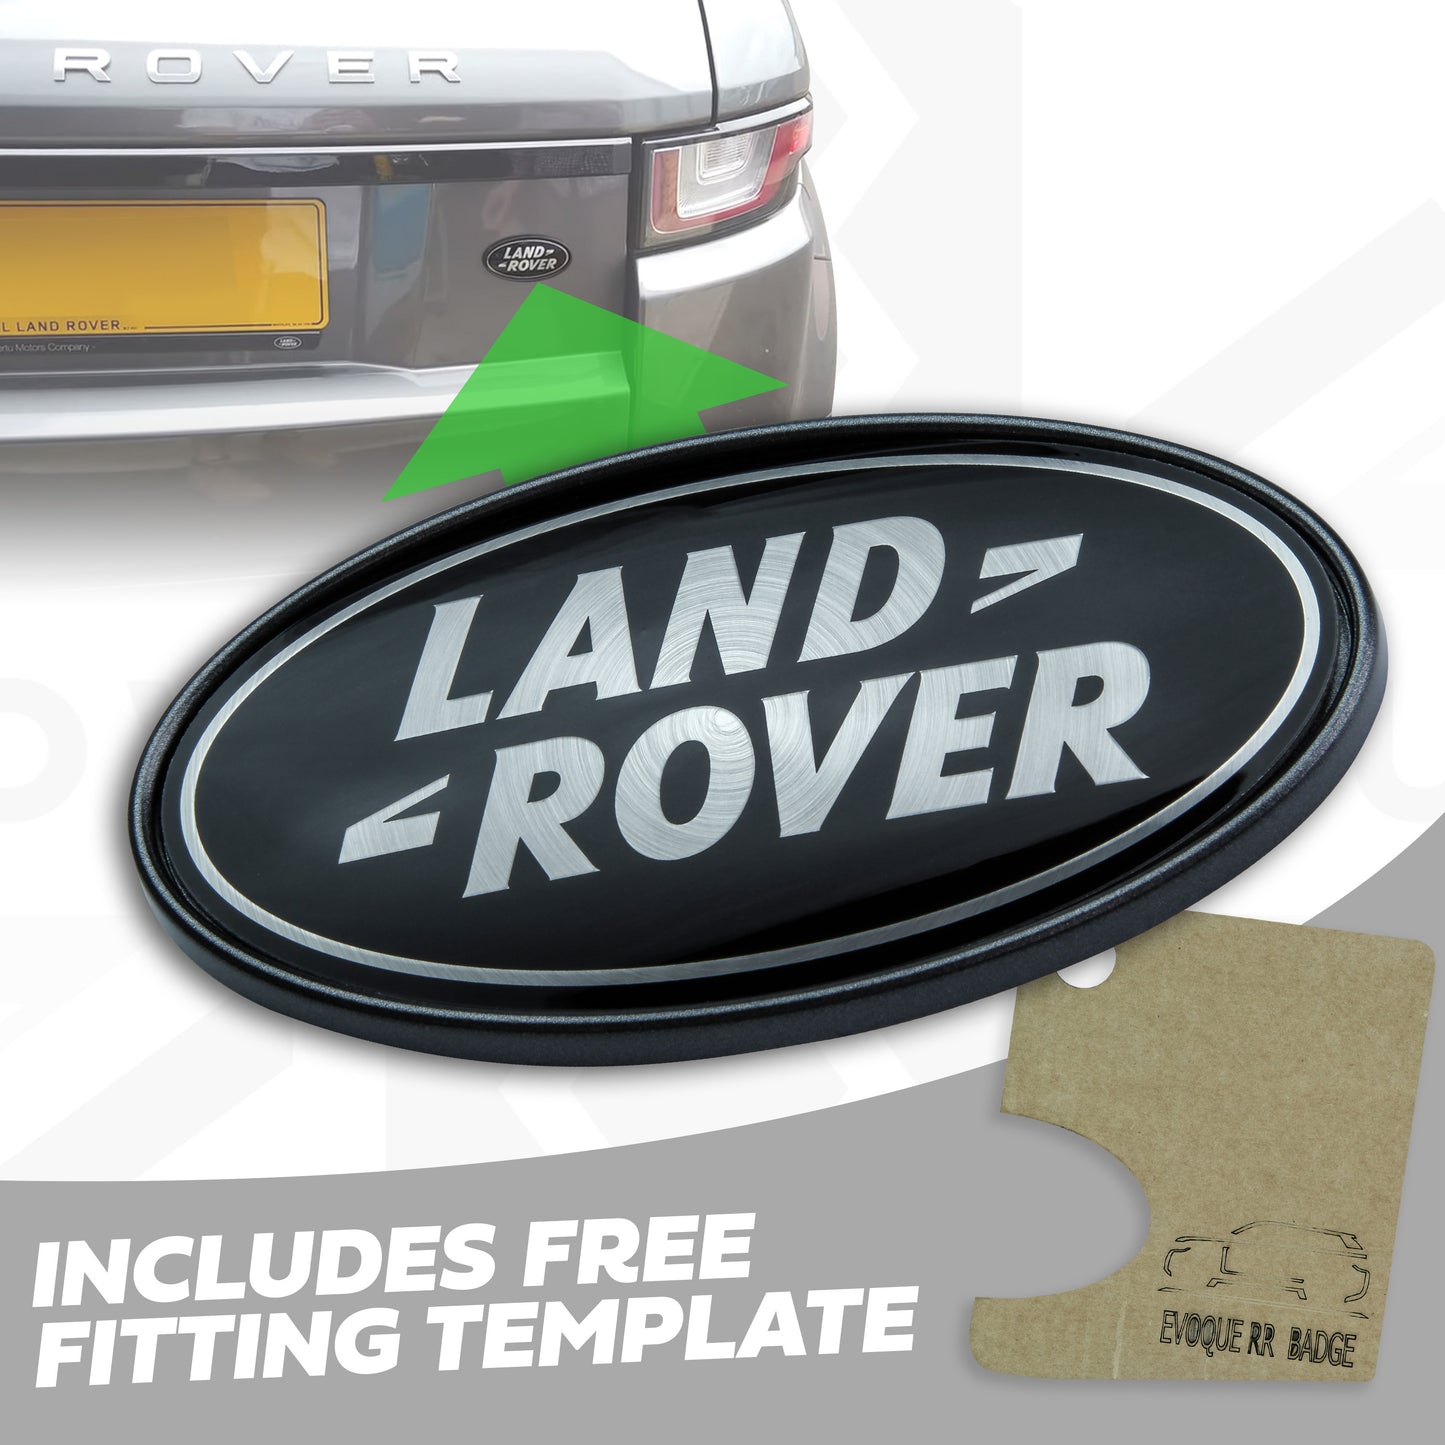 Black & Silver Badge on Corris Grey Plinth for Range Rover Evoque